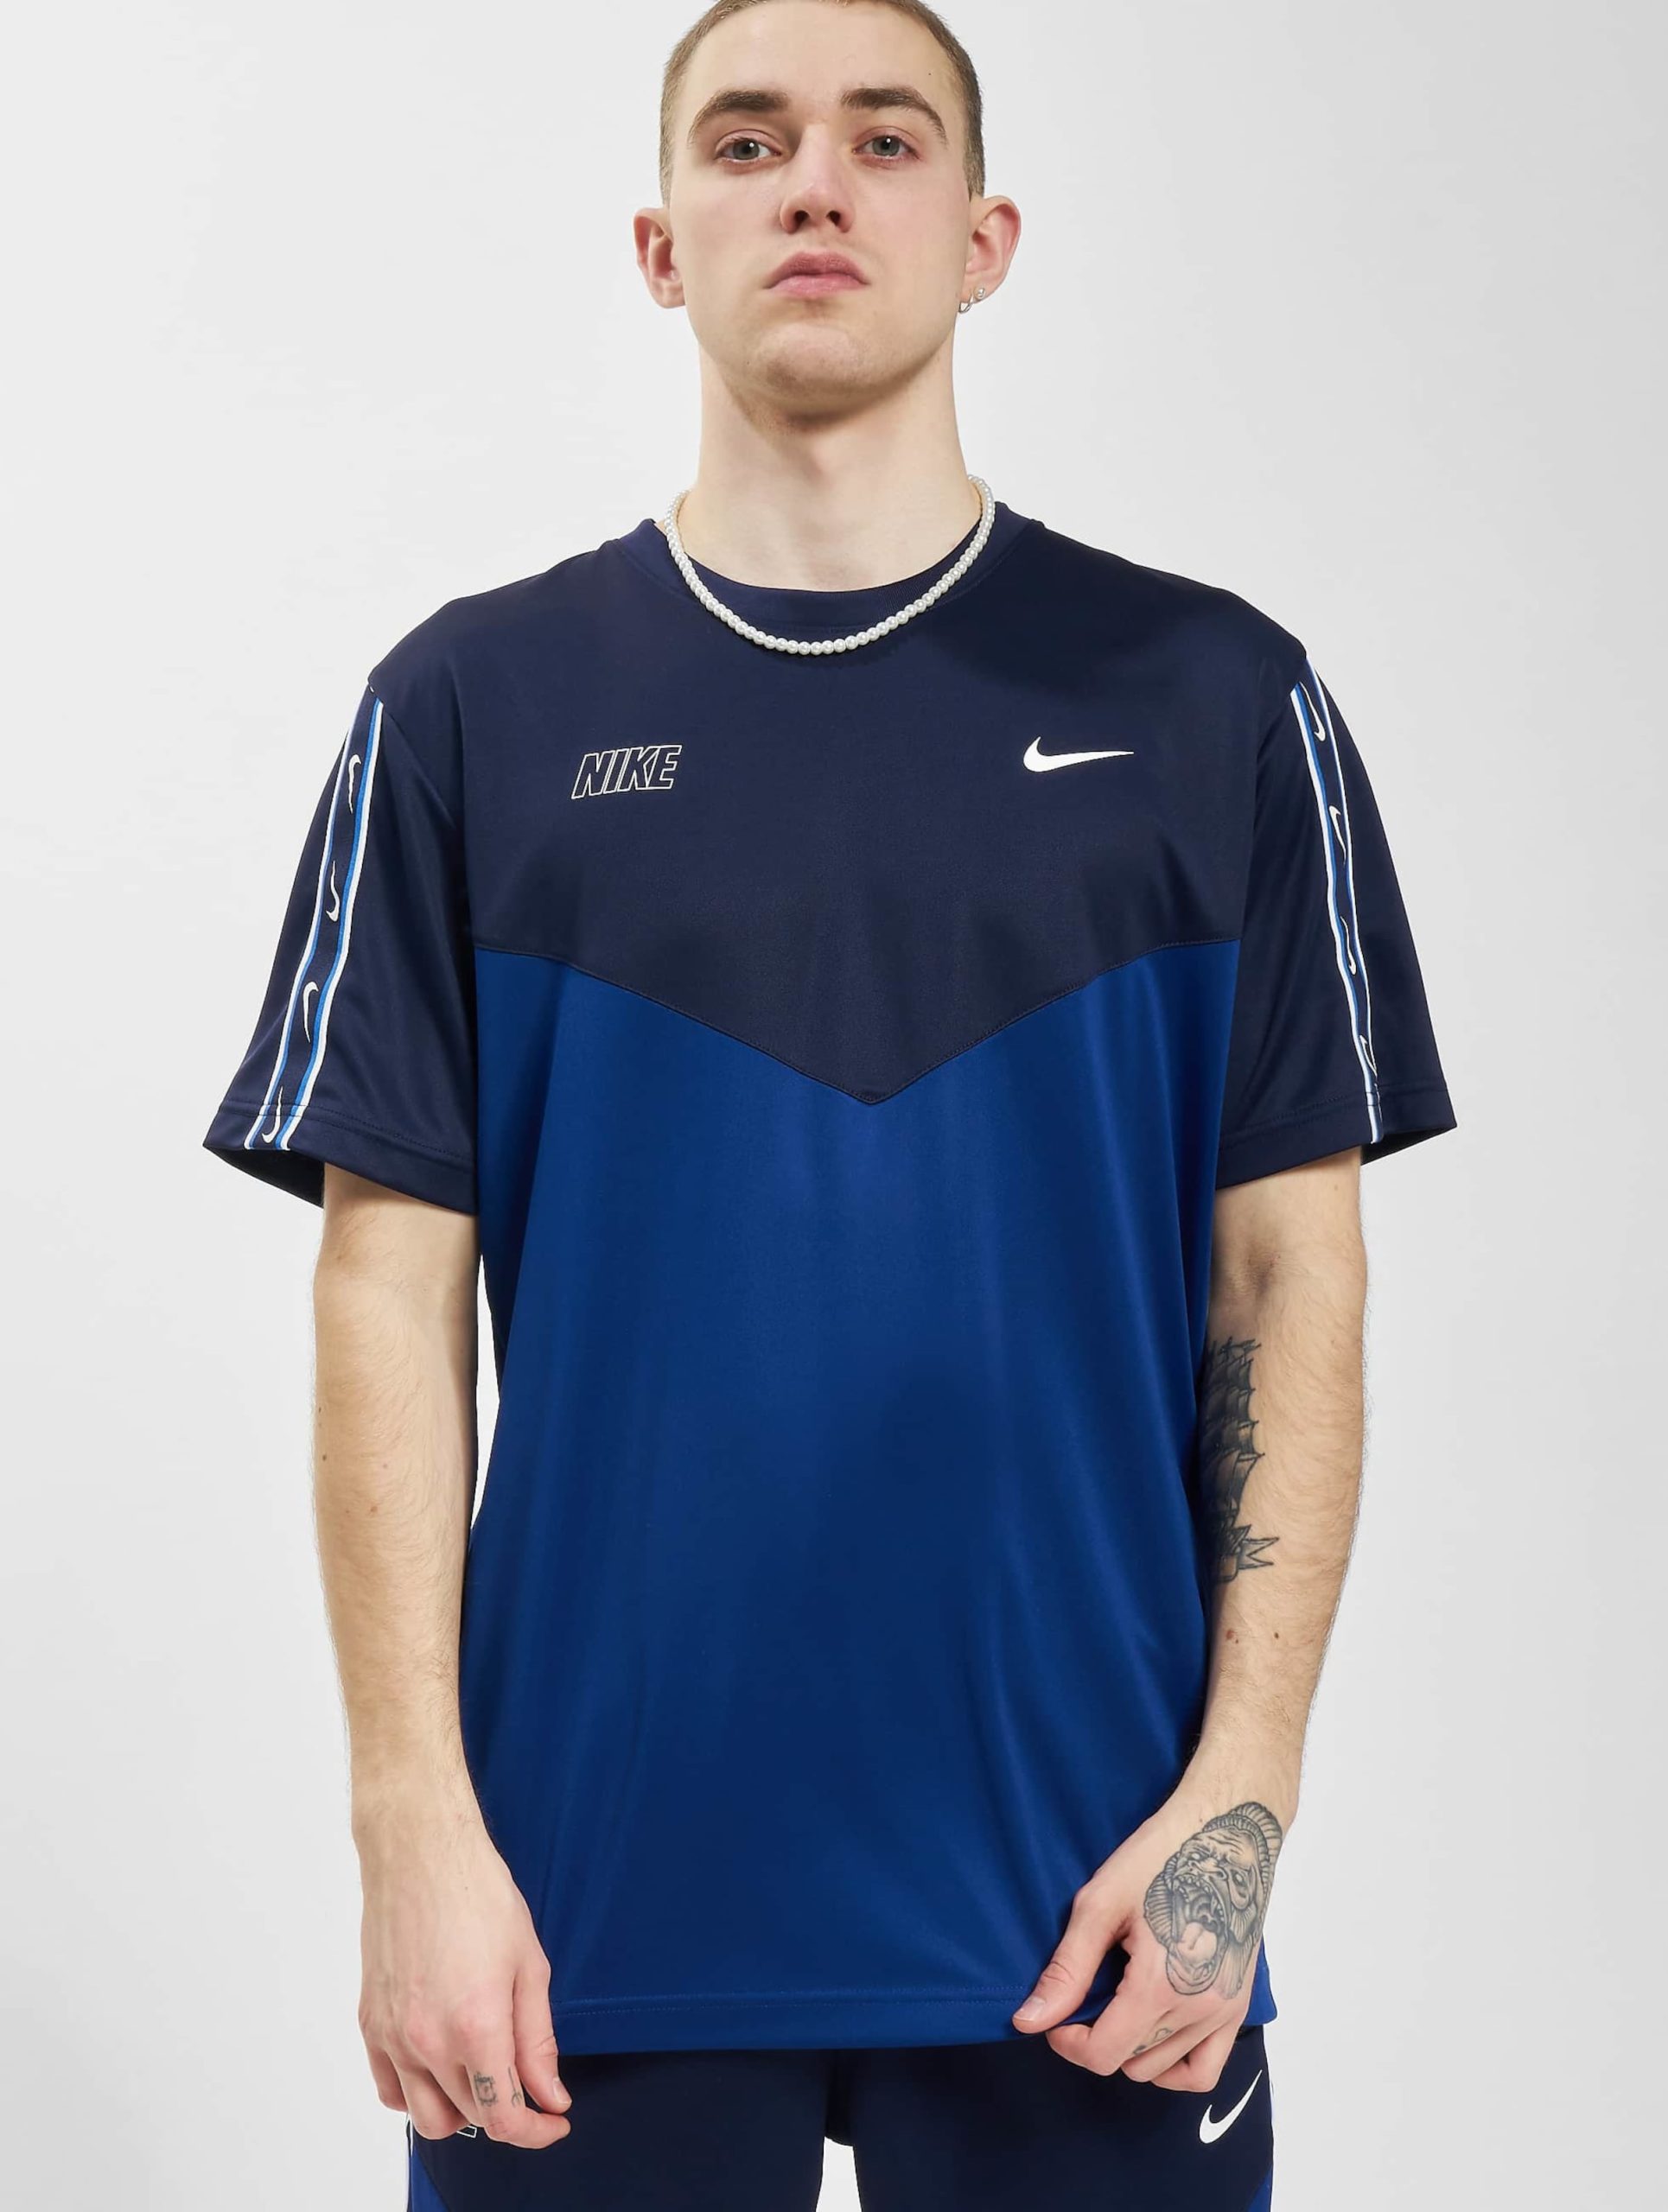 Nike NSW Repeat T-Shirt Blue/Blackened Männer,Unisex op kleur wit, Maat S